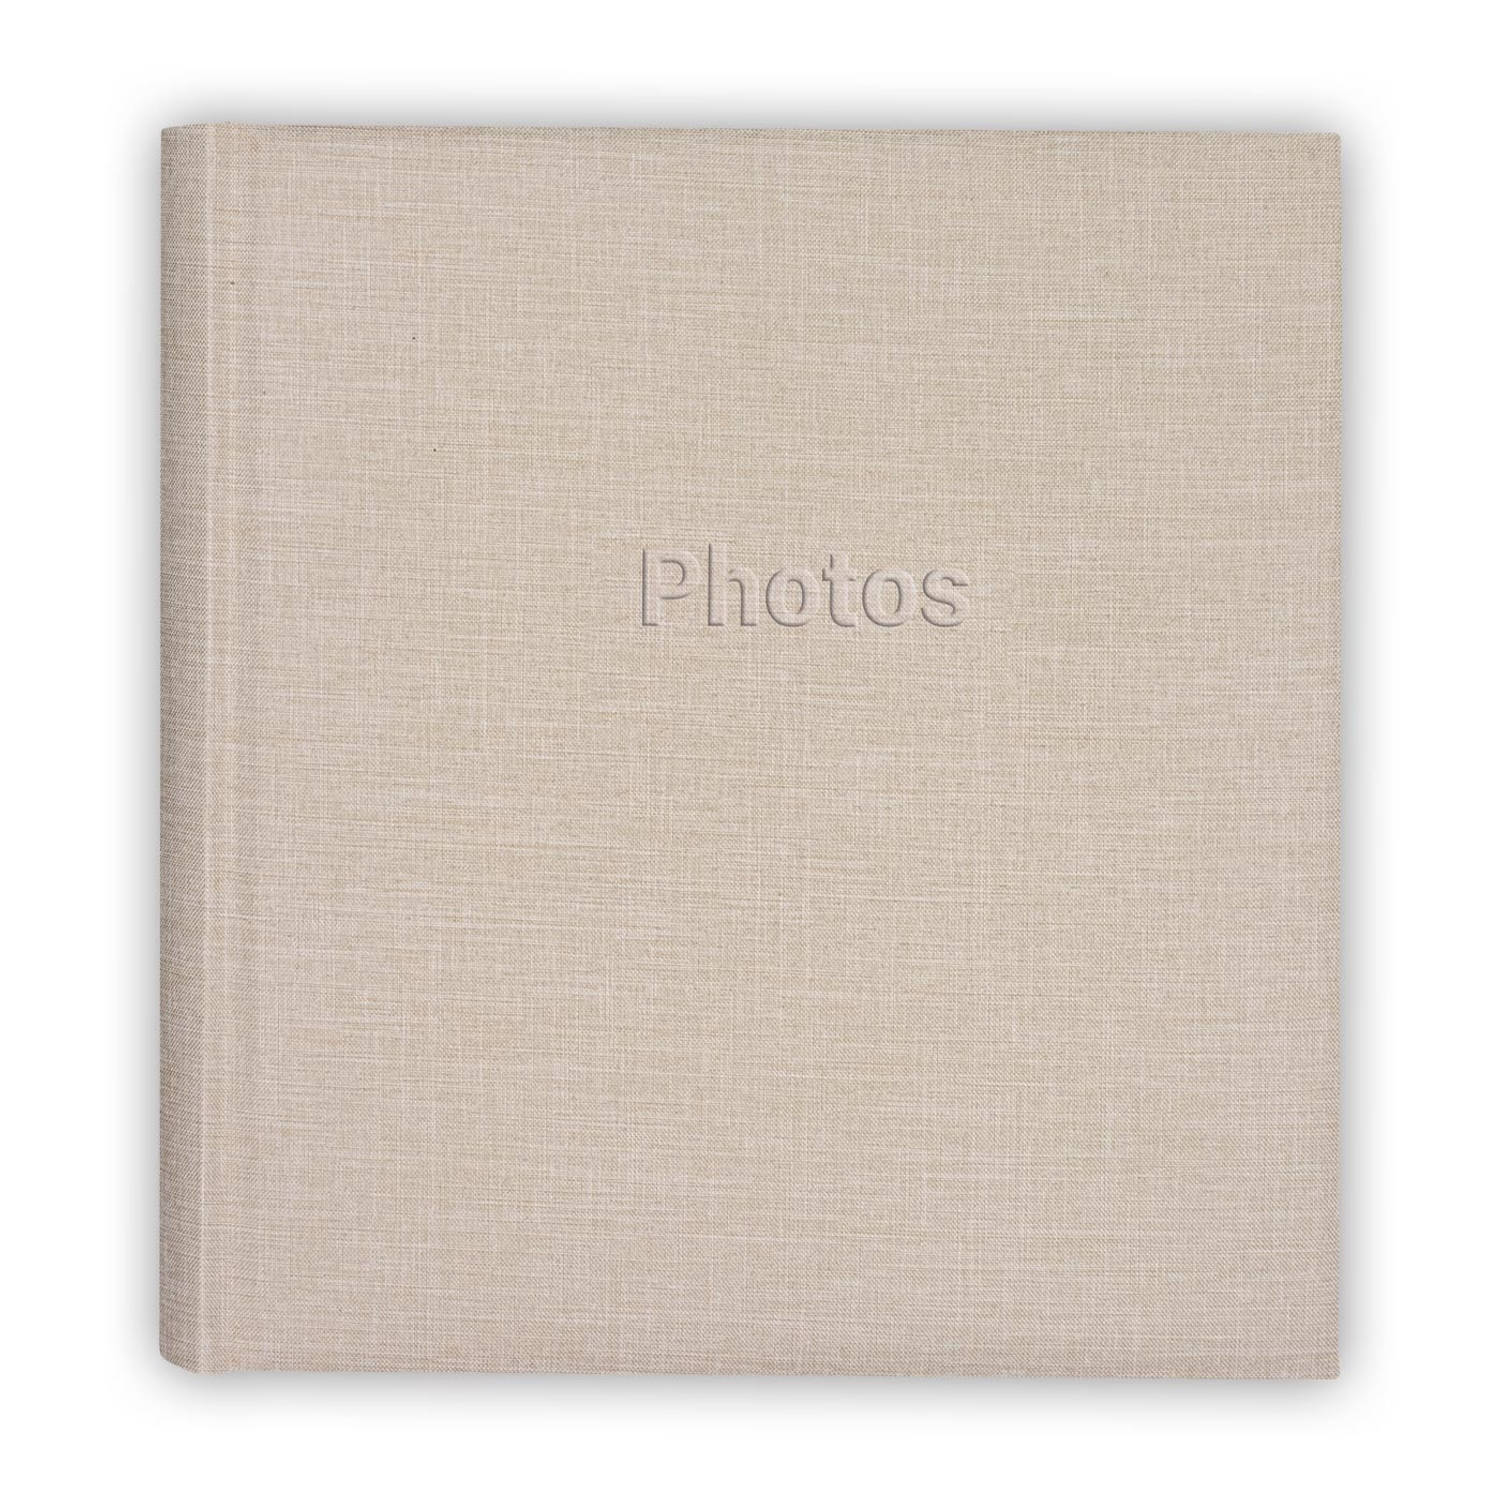 met 30 paginas creme x 31 x cm - Fotoalbums | Blokker